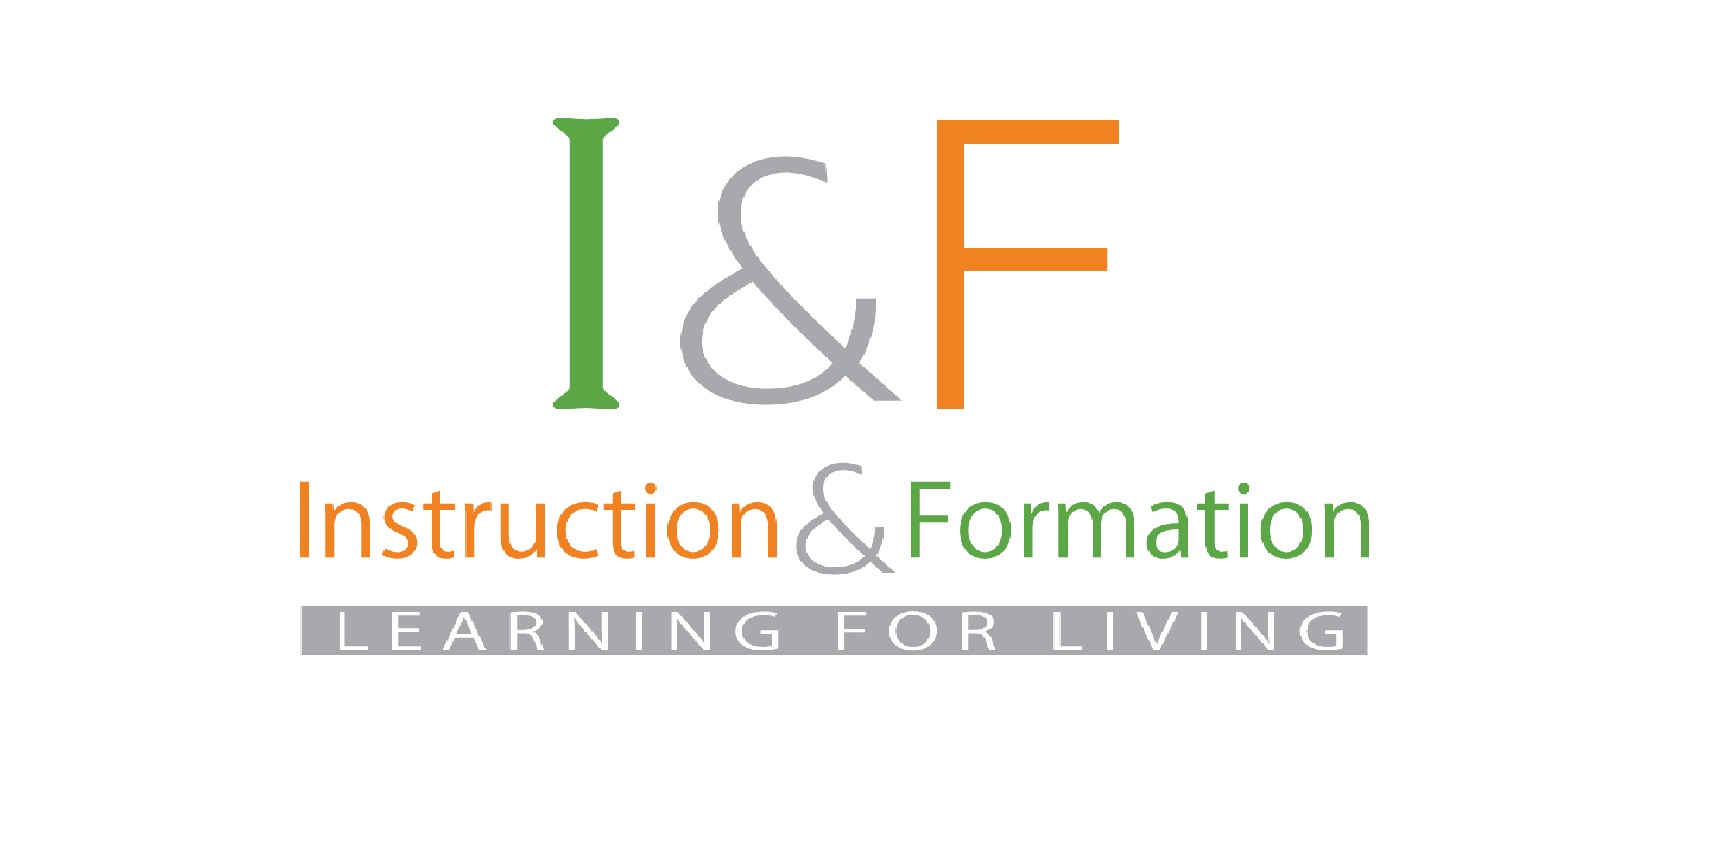 I-F-logo-INSTRUCTION-AND-FORMATION